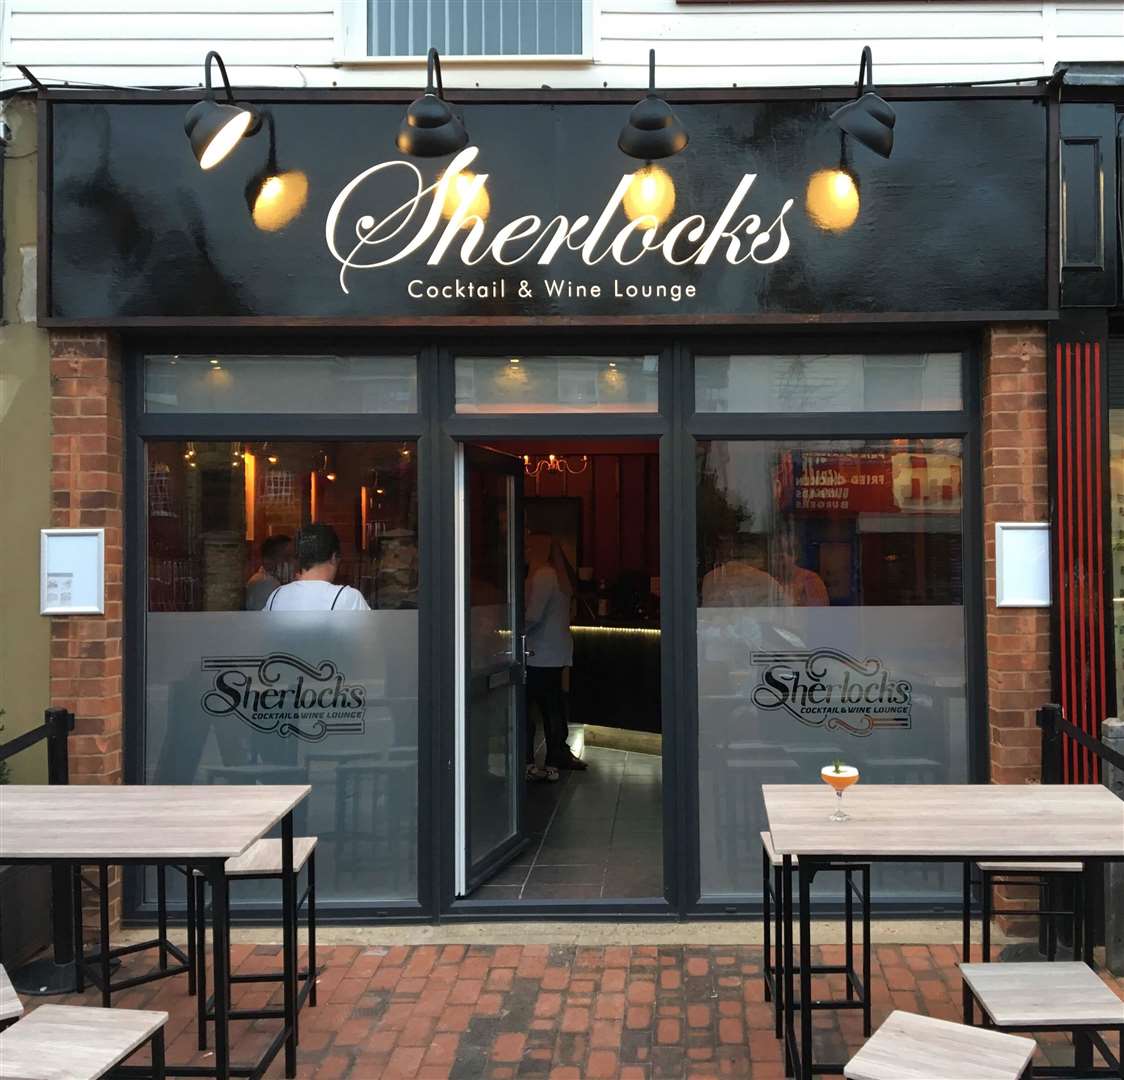 Sherlocks Cocktail & Wine Lounge is in Sittingbourne's West Street